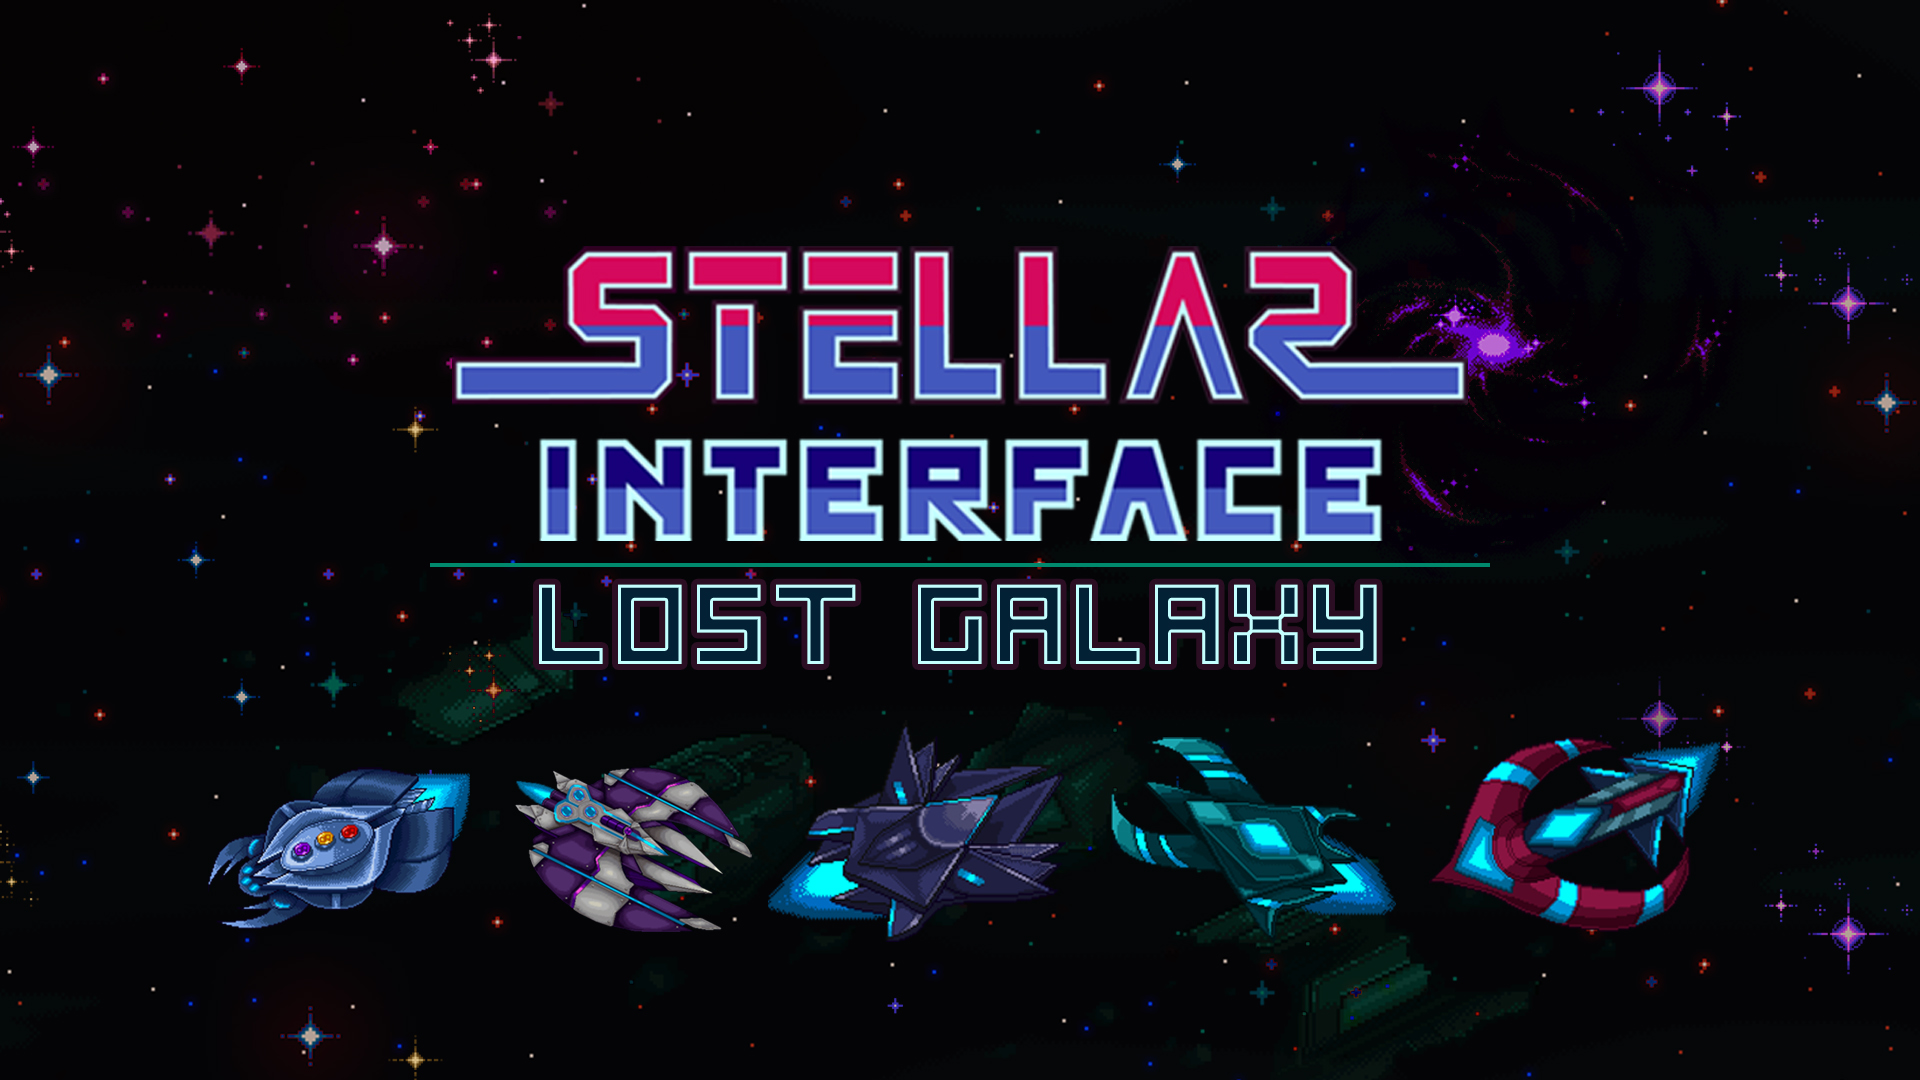 Stellar Interface - Lost Galaxy